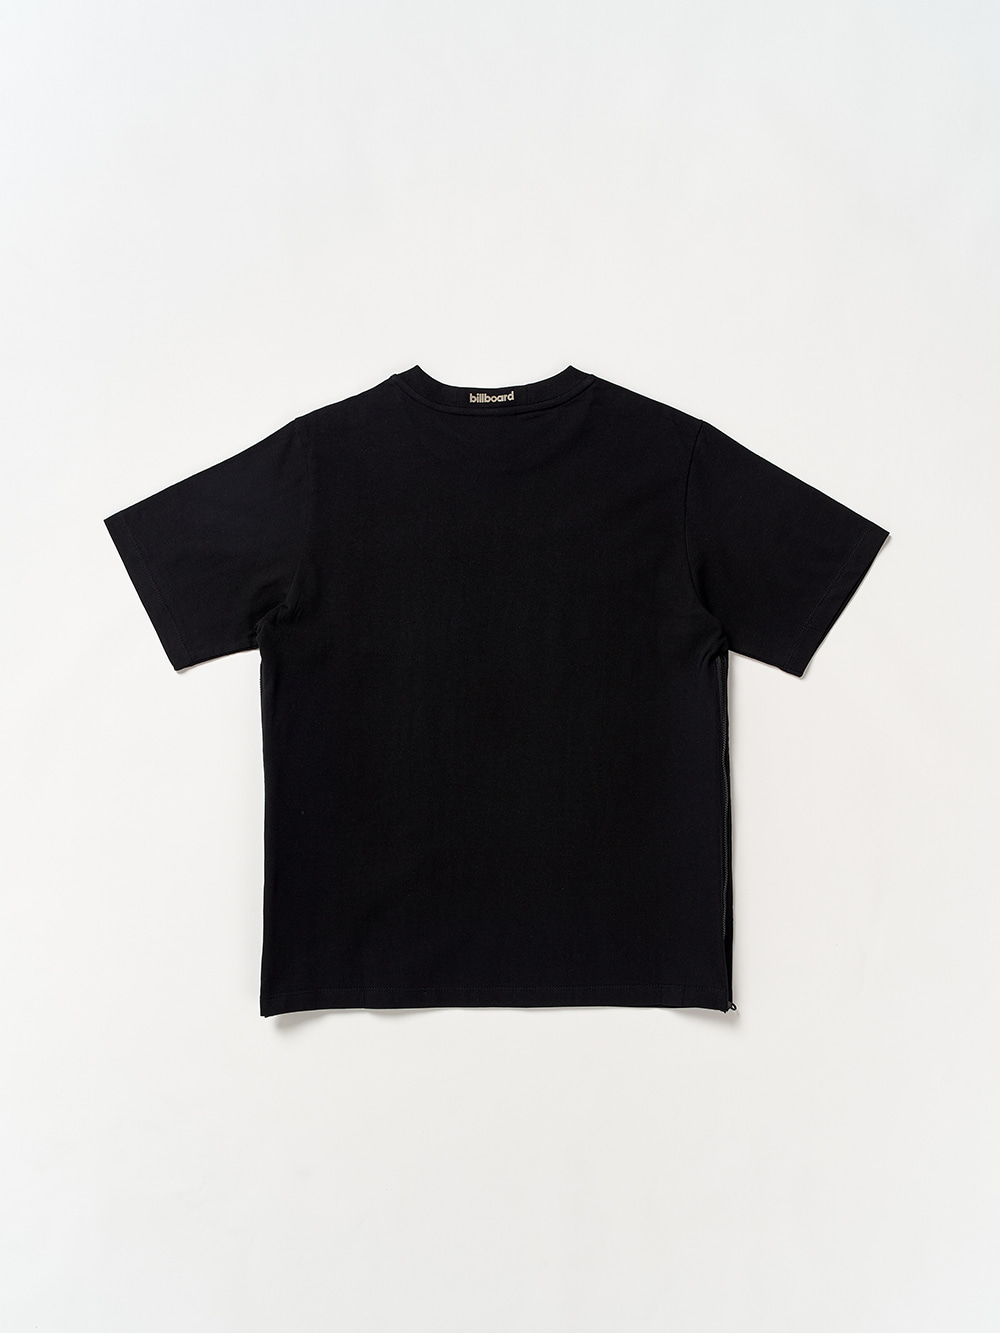 side zip-up detail Half T-Shirts_Black